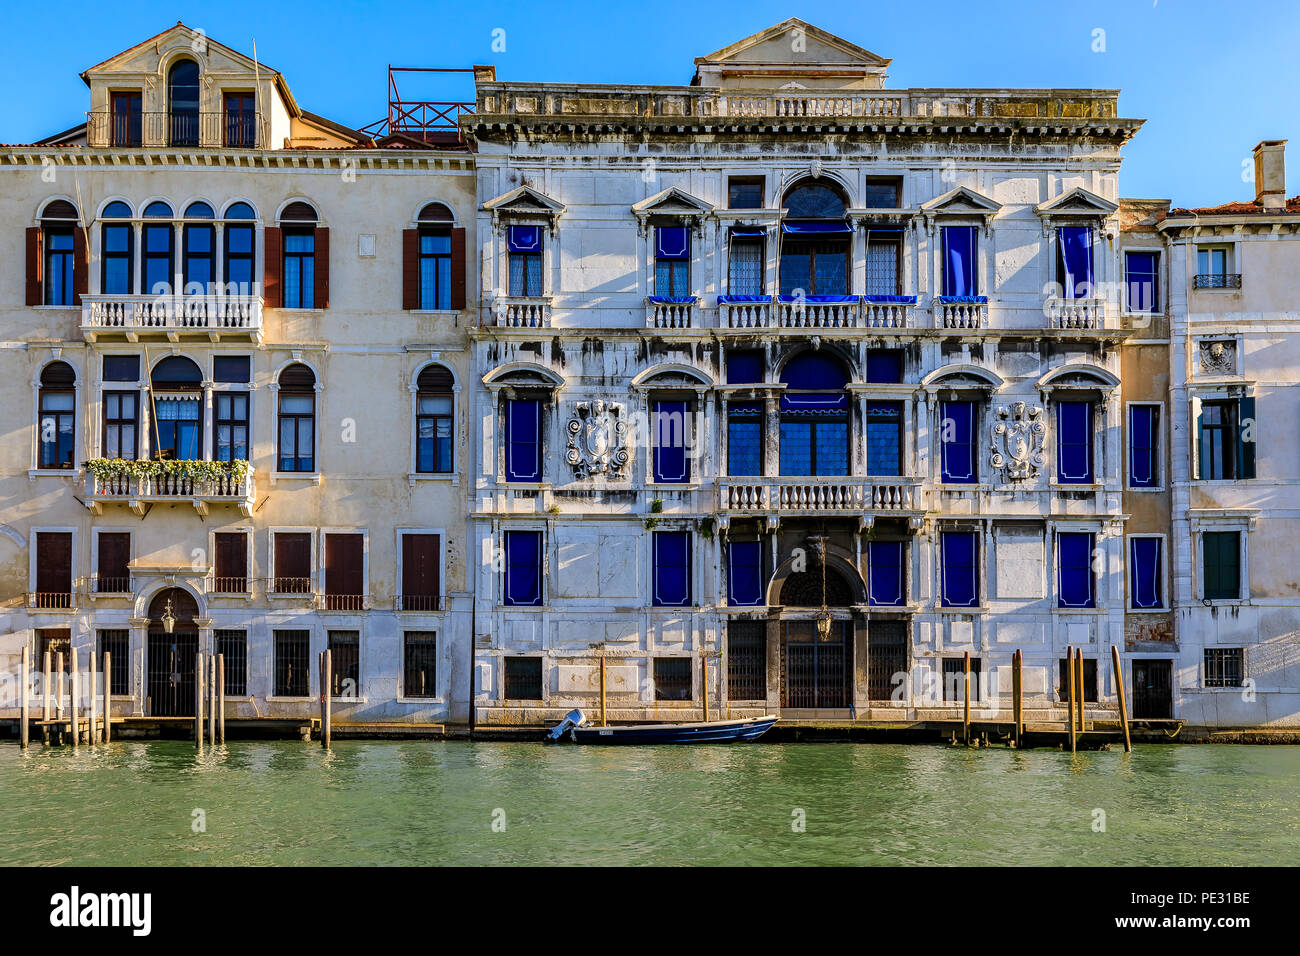 Venedig, Italien, 24. September 2017: malerische Fassaden in venezianischer gotischer Architektur entlang des Grand Canal Stockfoto